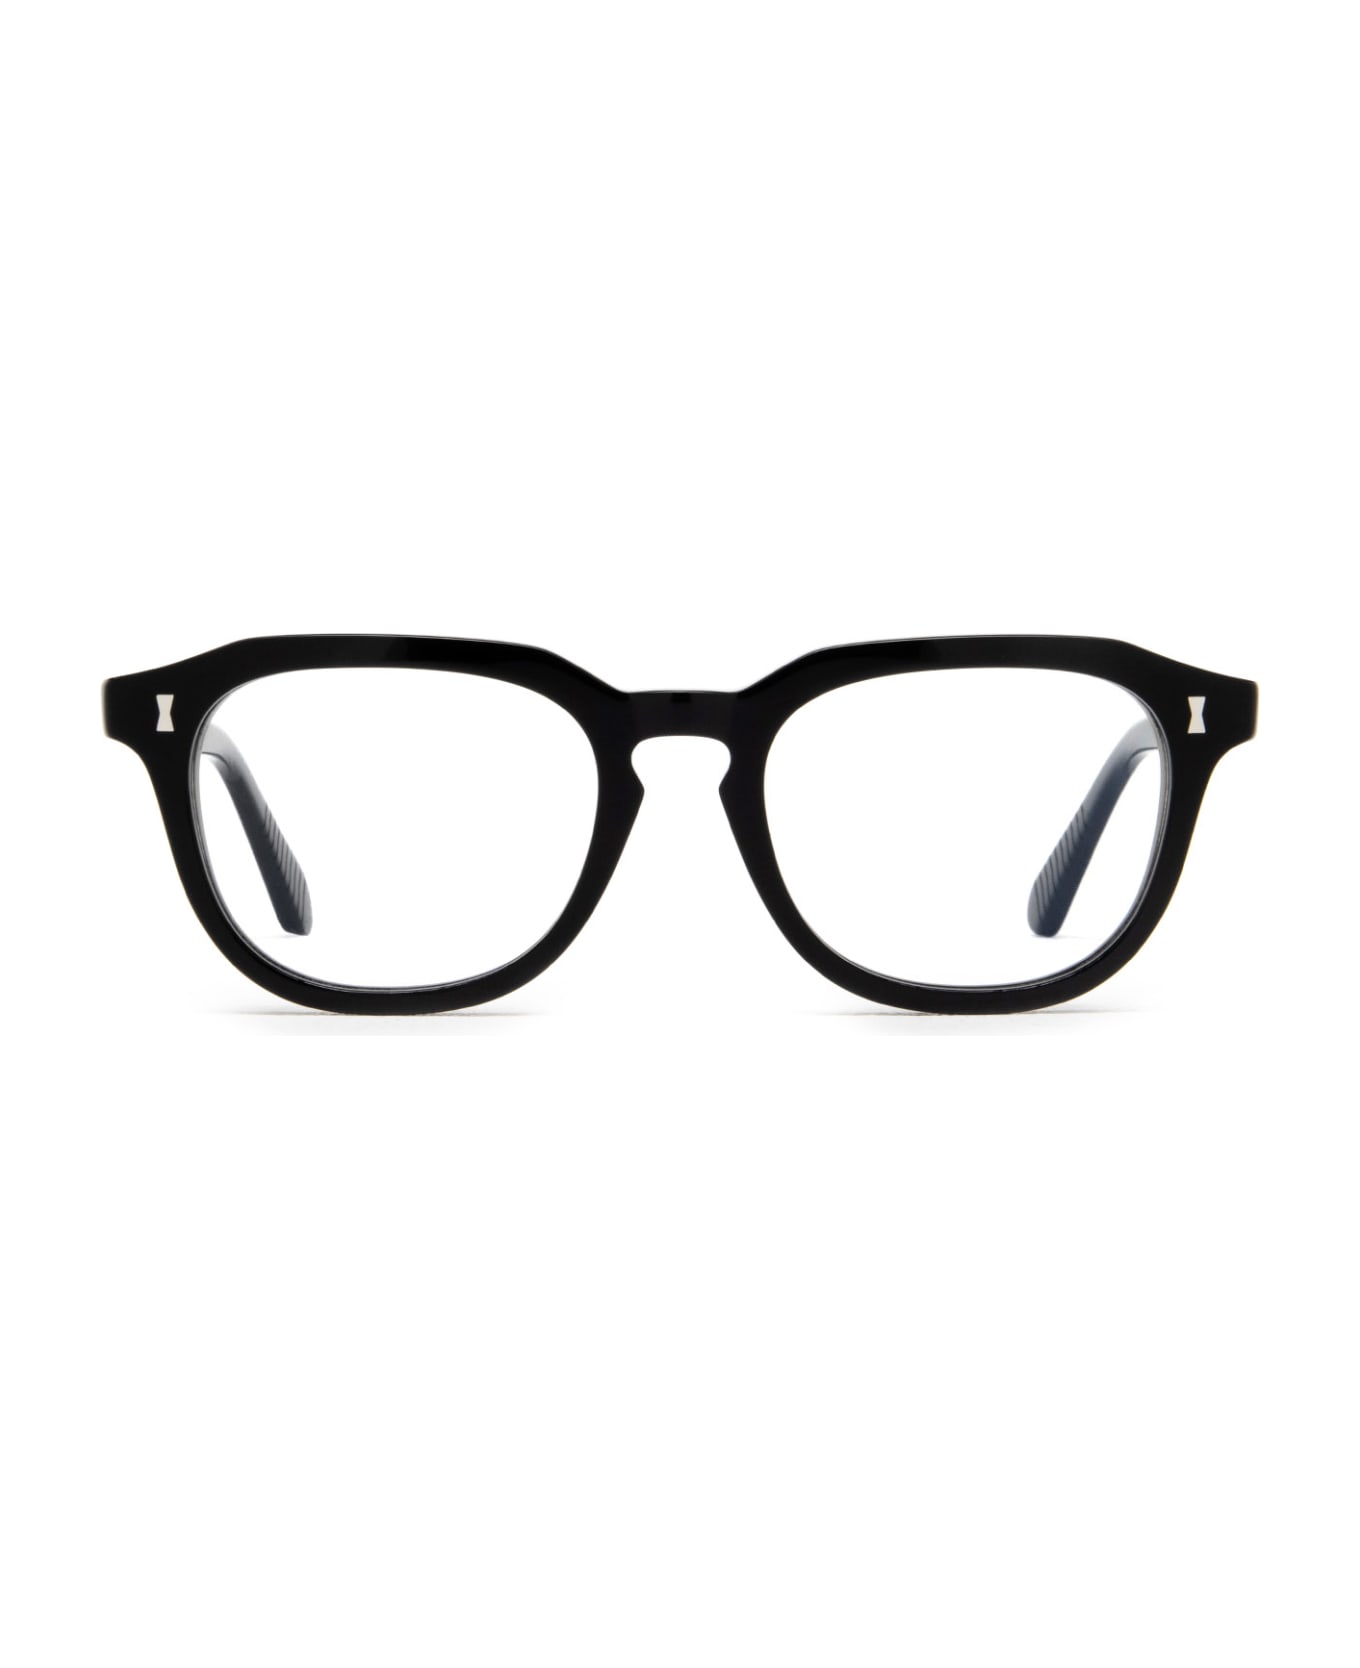 Cubitts Bunning Black Glasses - Black アイウェア